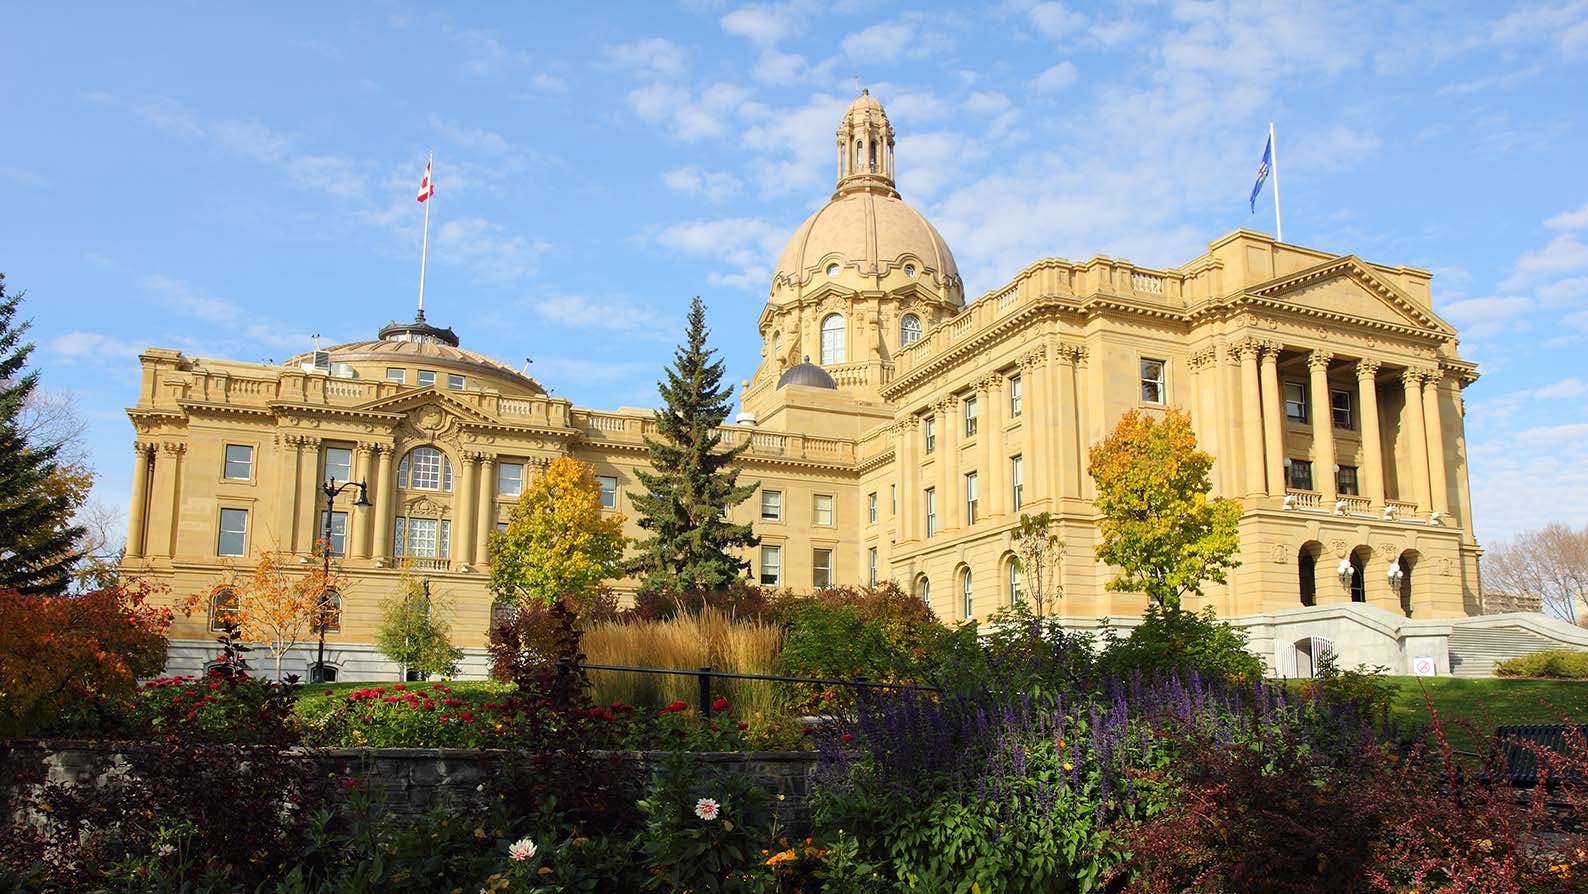 Alberta Legislature